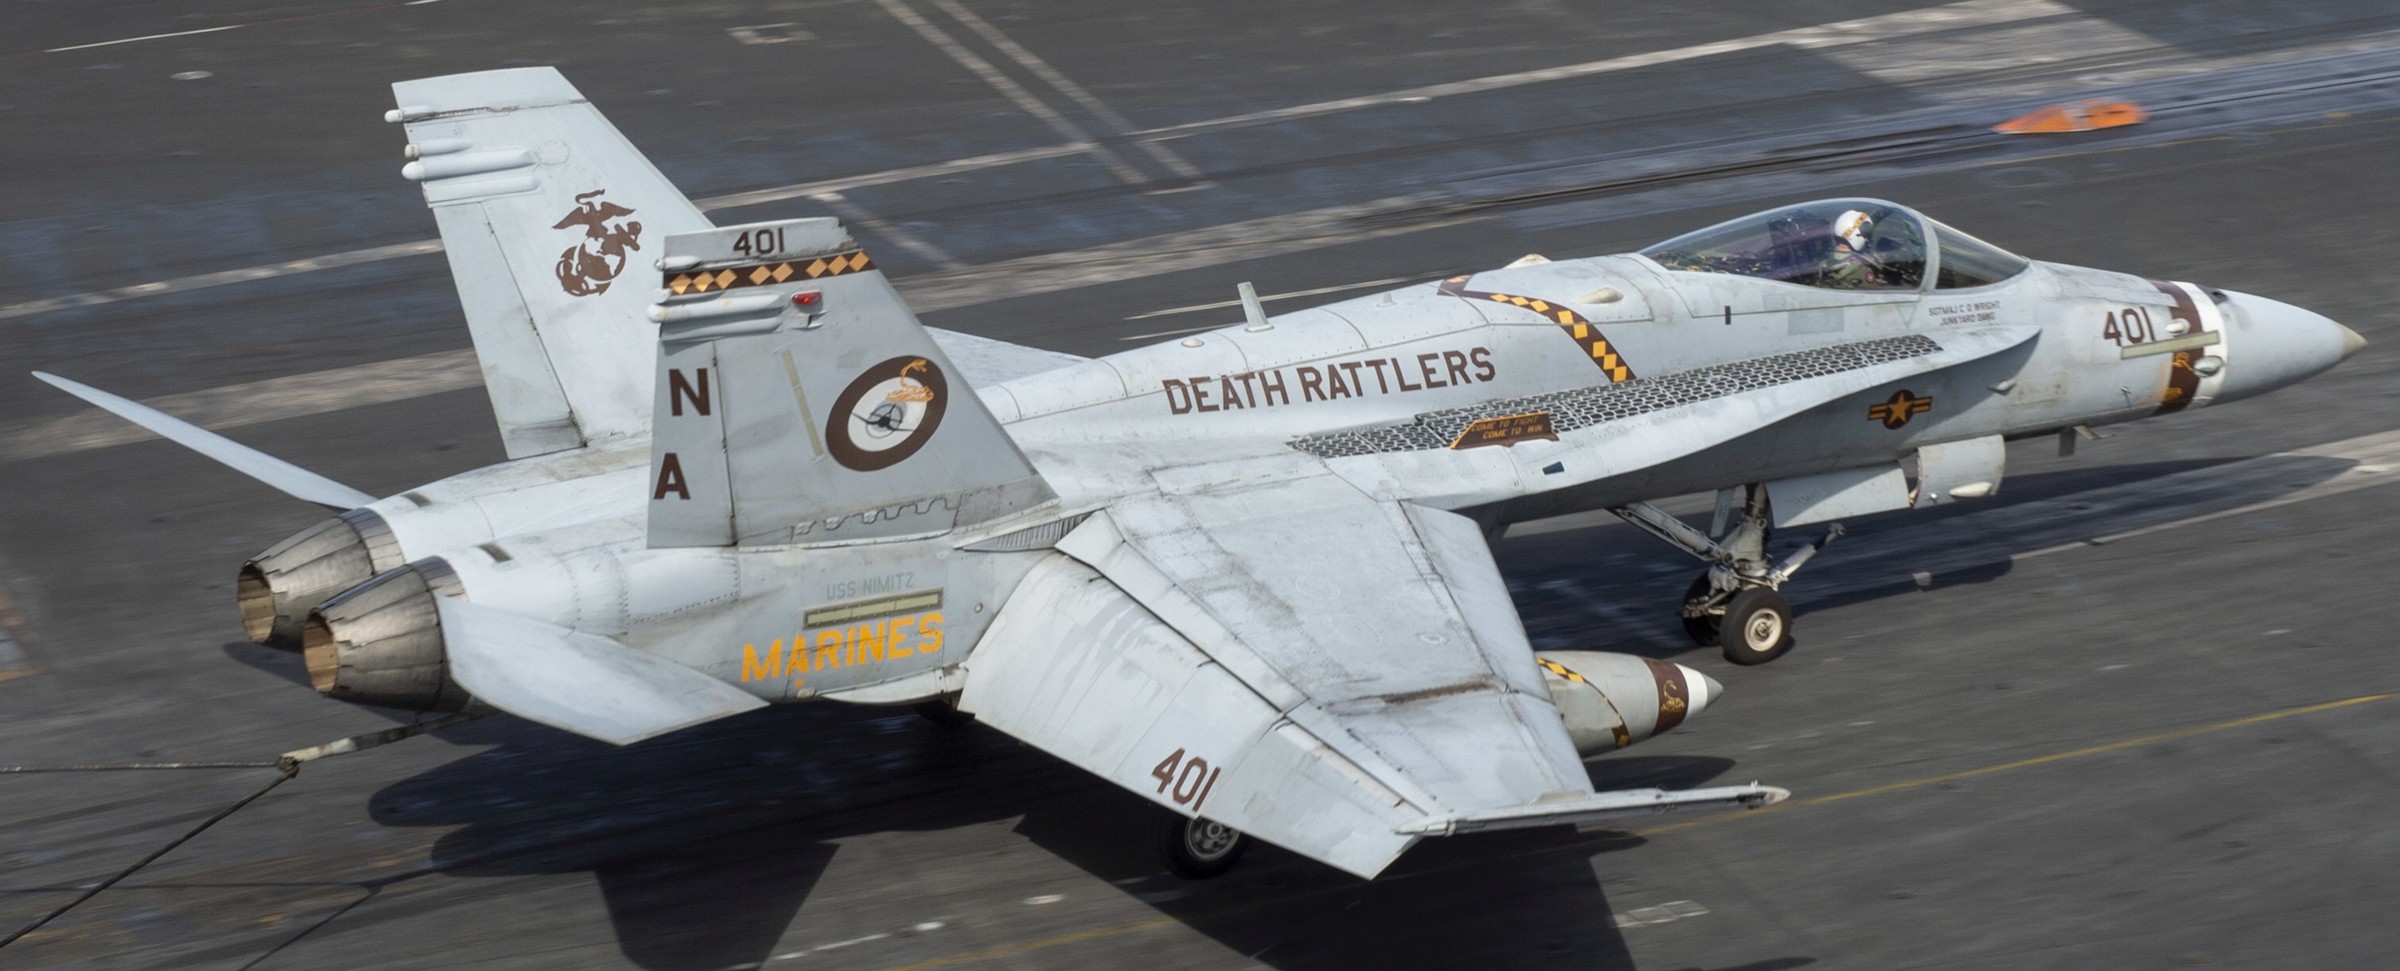 vmfa-323 death rattlers marine fighter attack squadron f/a-18c hornet cvw-17 uss nimitz cvn-68 219